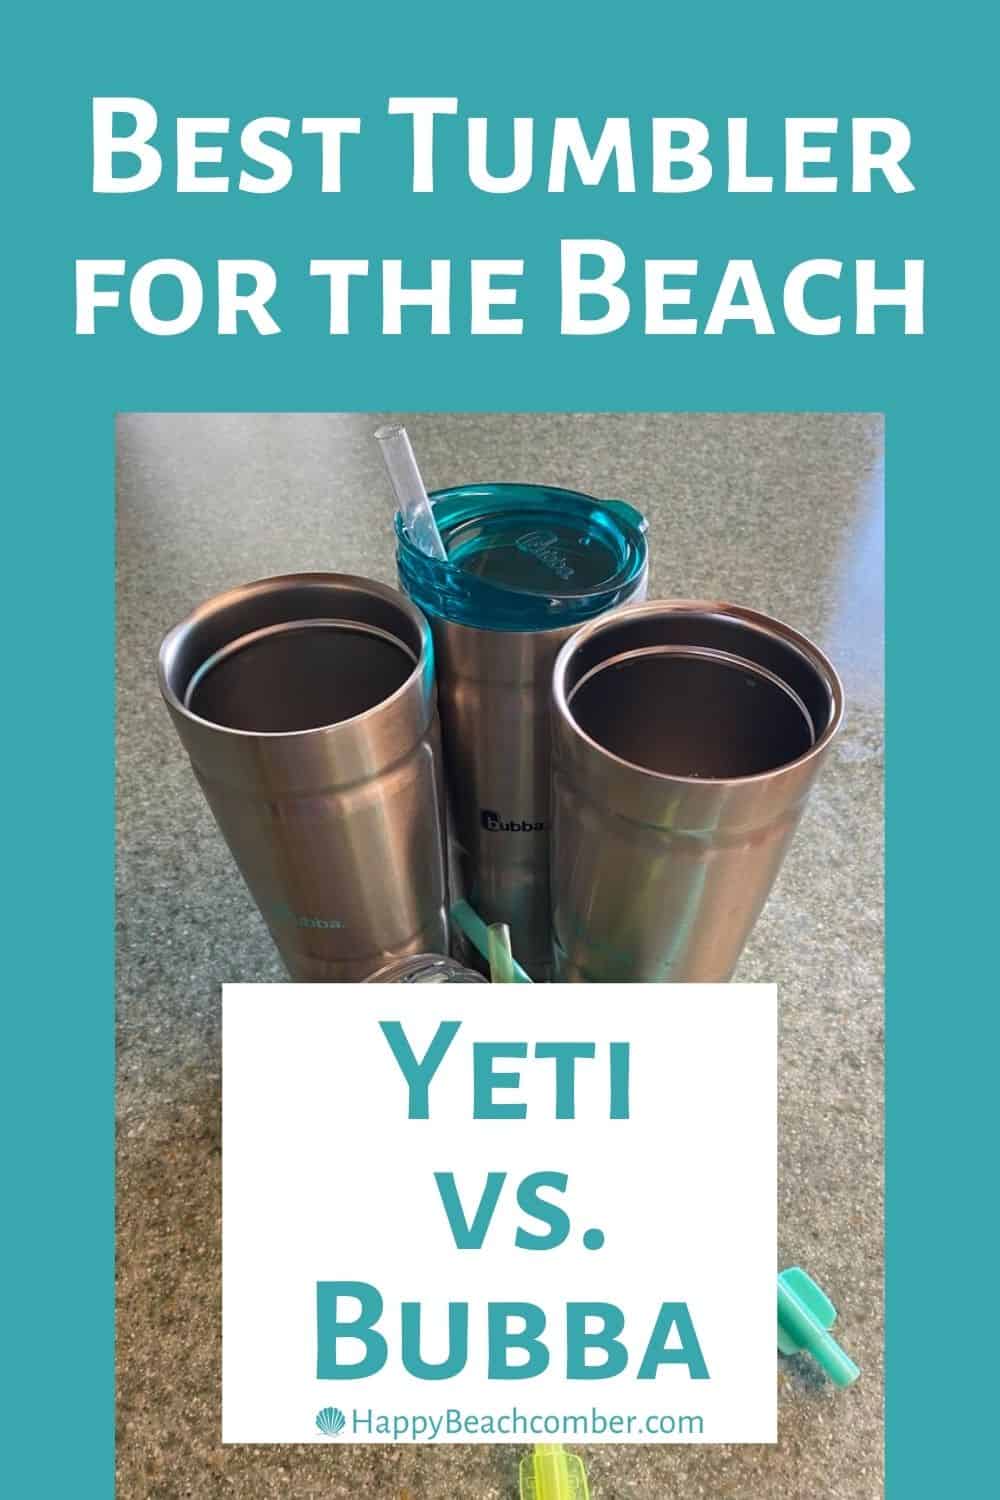 Best Tumbler for the Beach - Yeti vs. Bubba